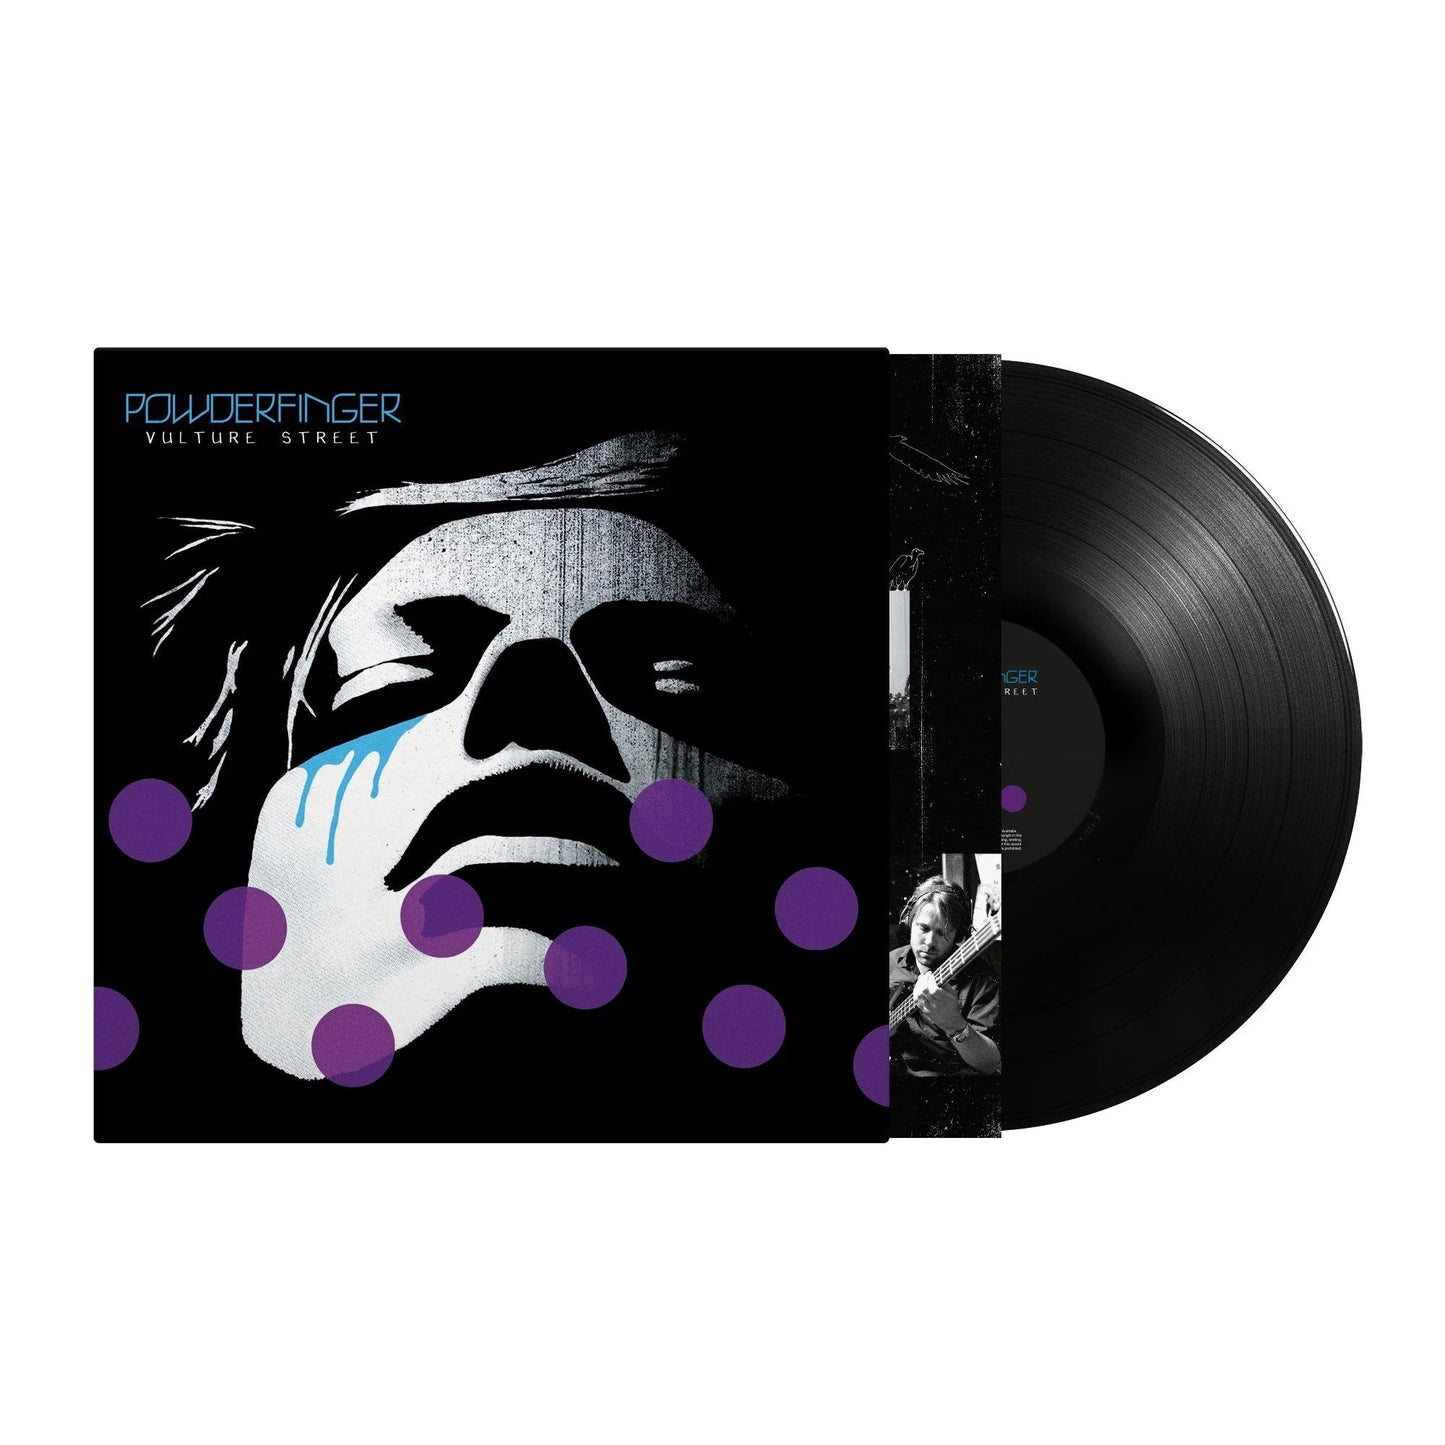 Powderfinger - Vulture Street - 20th Anniversary Edition Vinyl